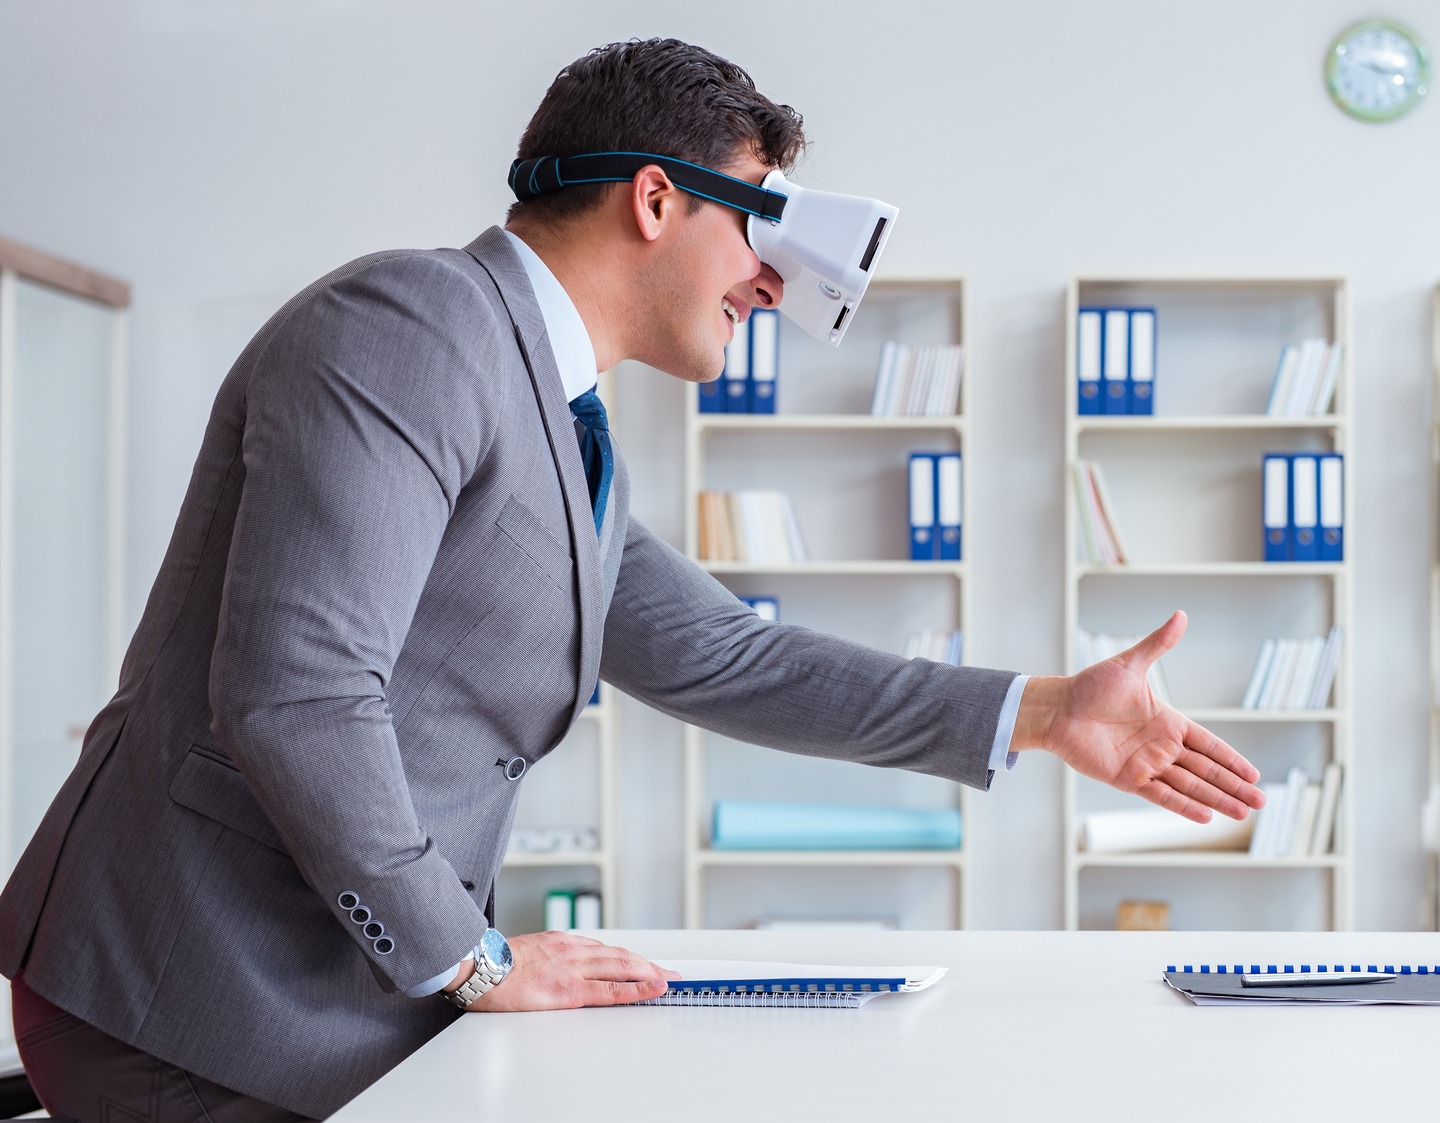 virtual reality - the future of tech recruiting?